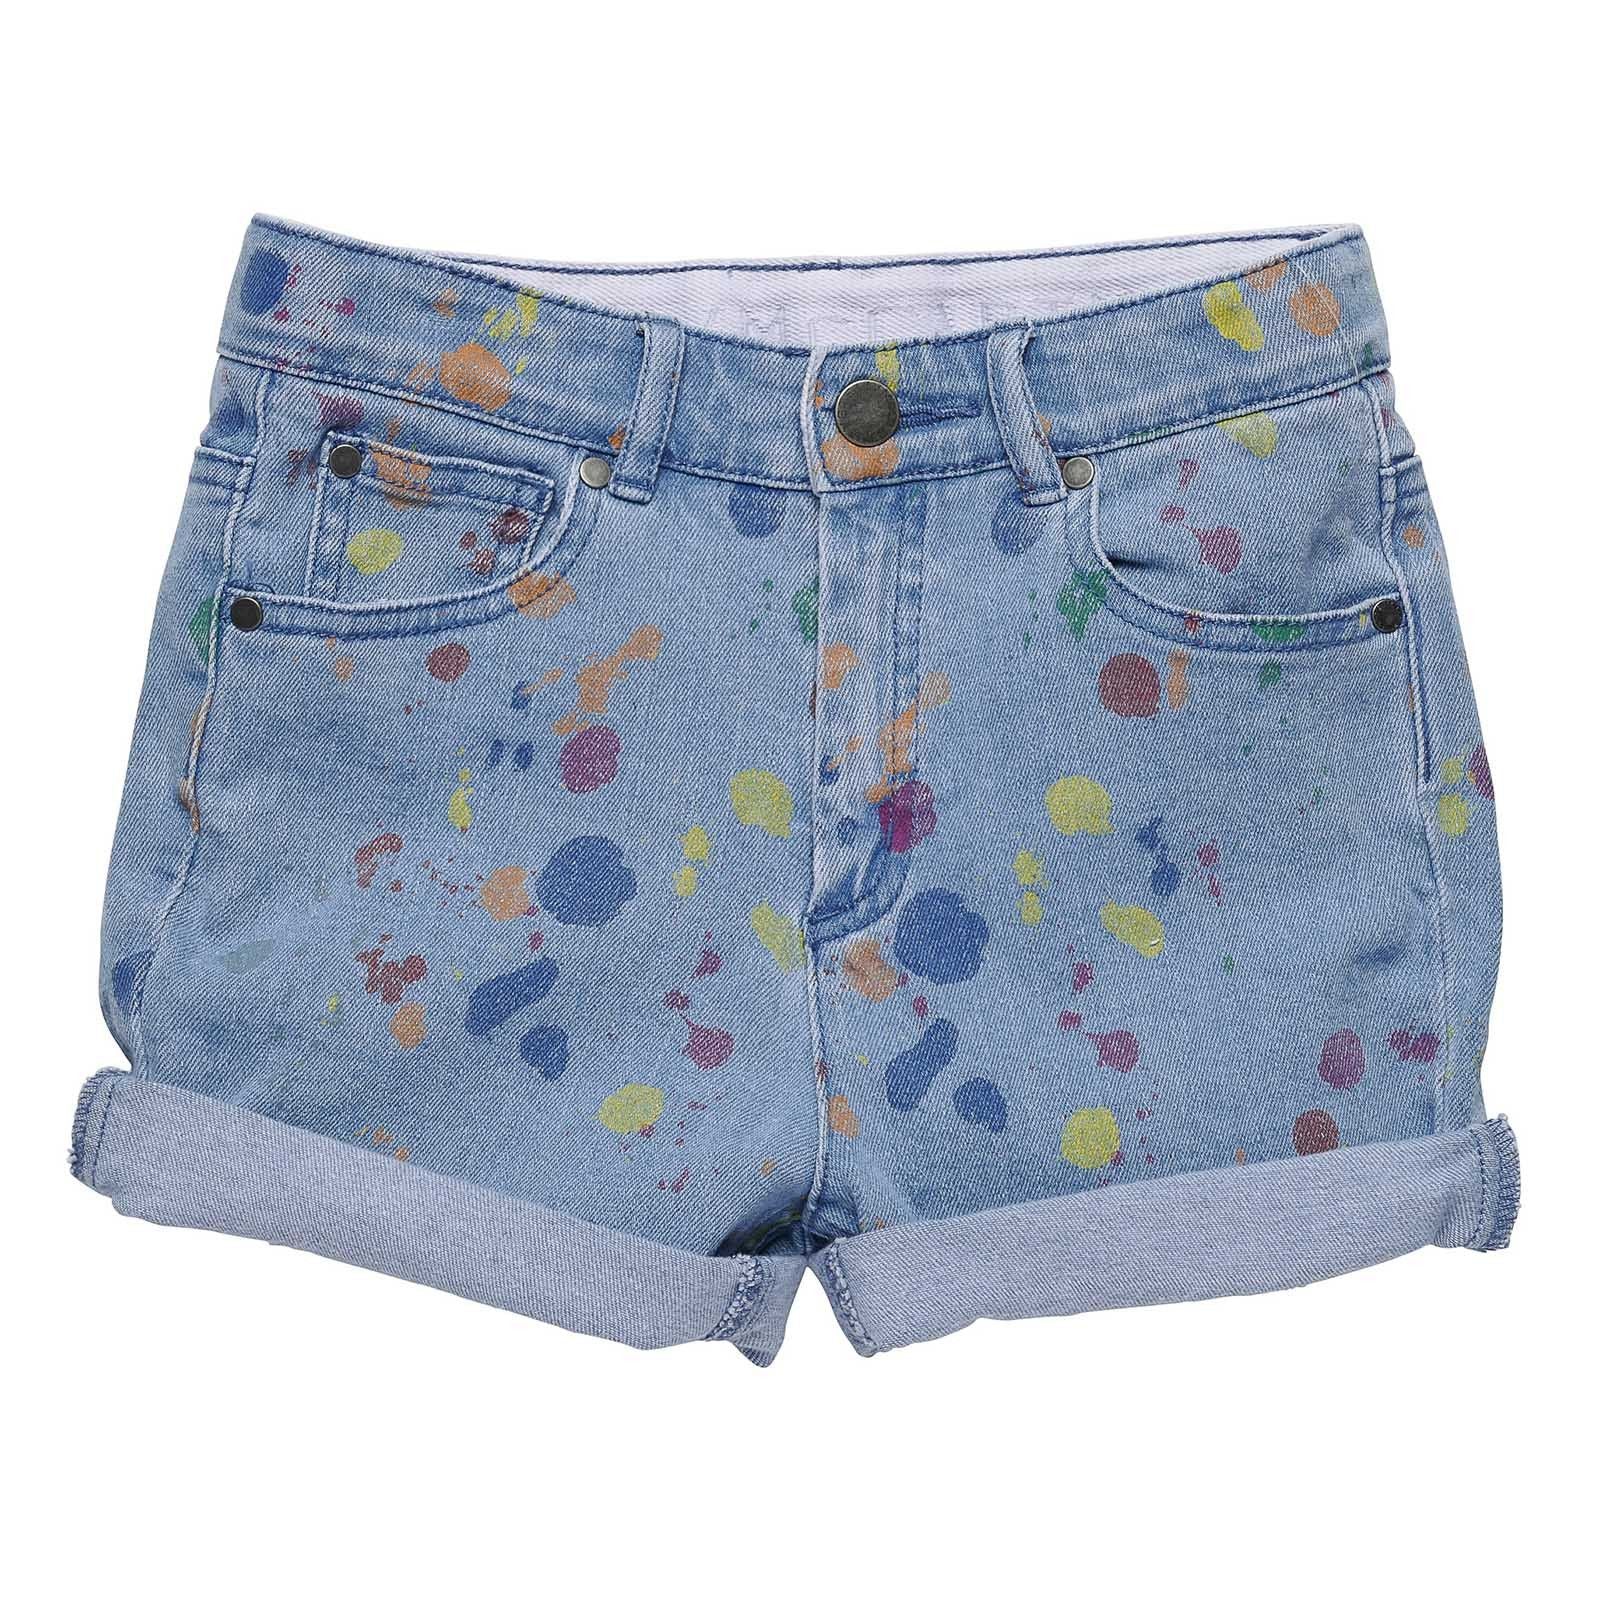 Boys&Girls Blue Denim Cotton Shorts With Turn Up Cuffs - CÉMAROSE | Children's Fashion Store